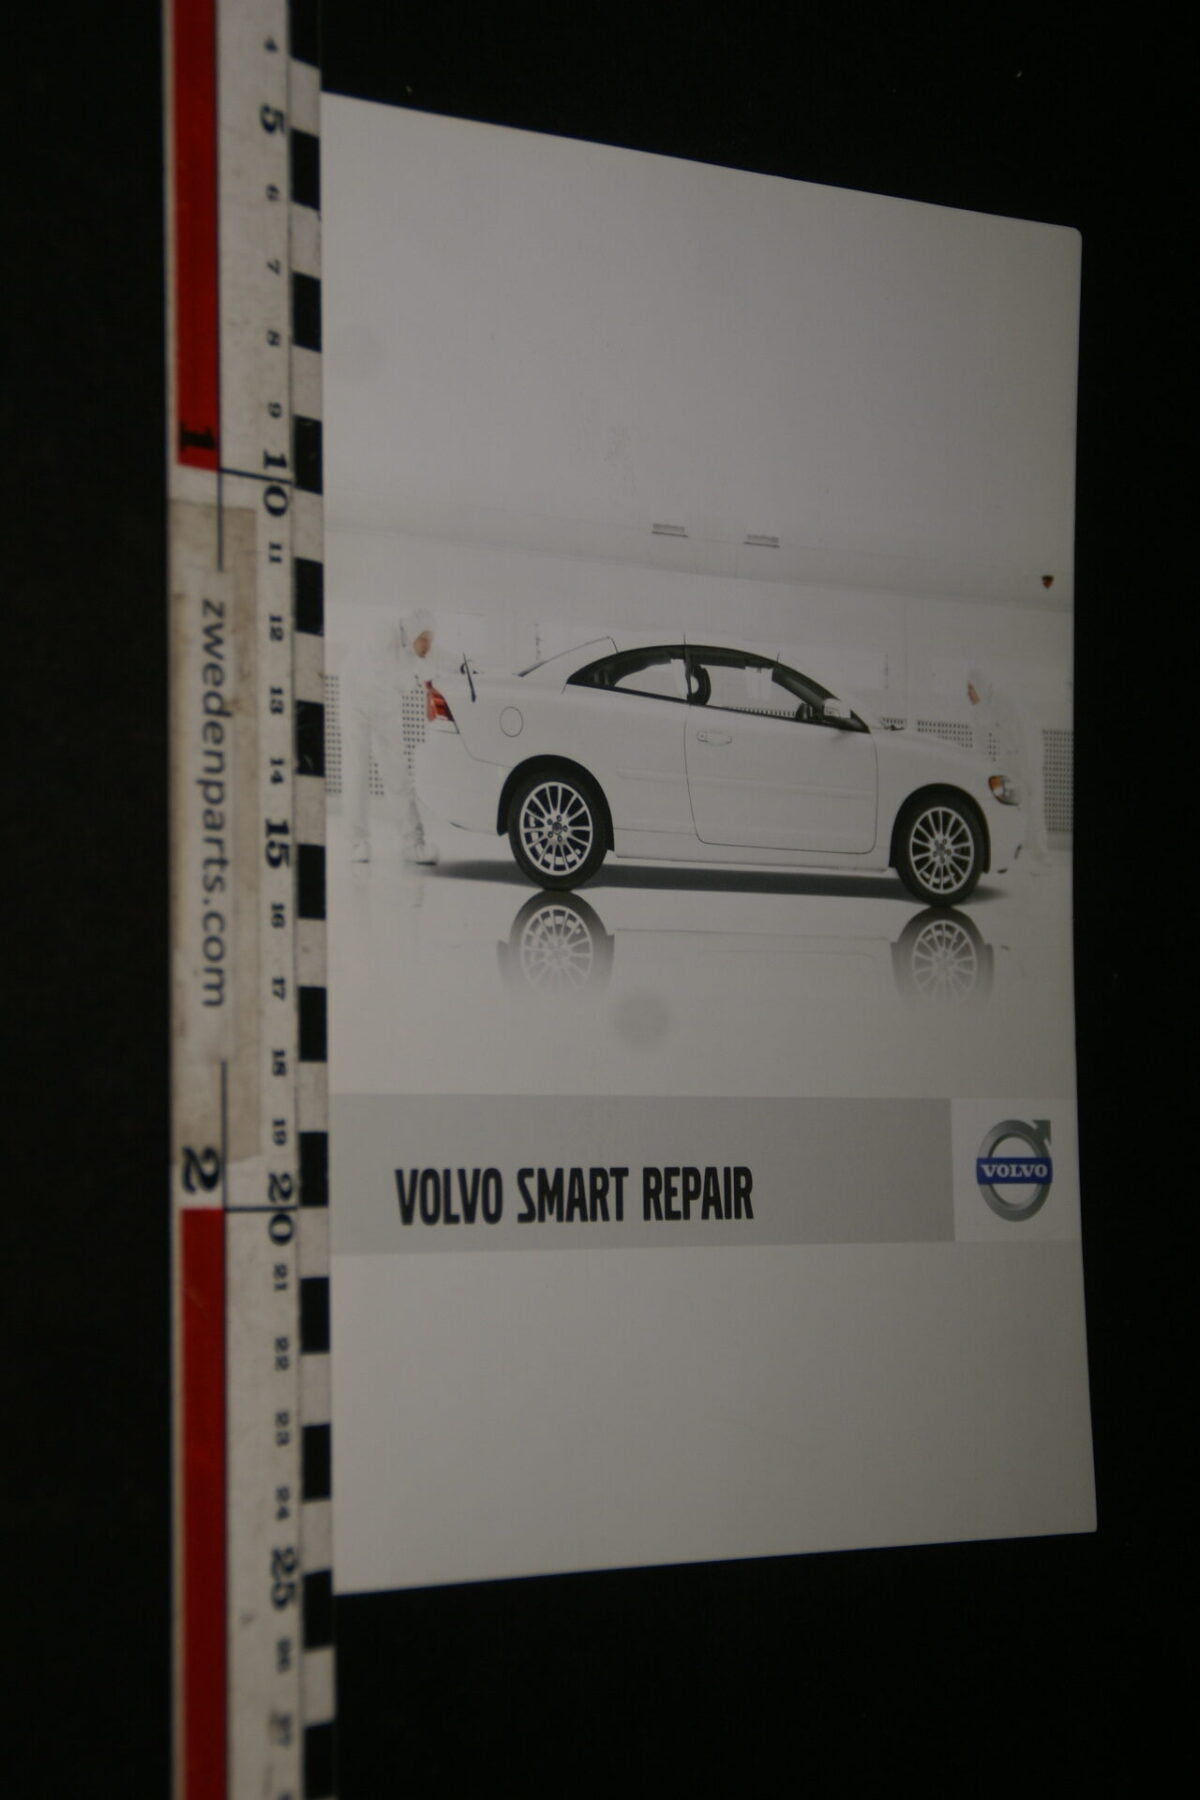 DSC06200 2009 origineel boekje Volvo Smart Repair, nr. 7101015, English-4b3404df